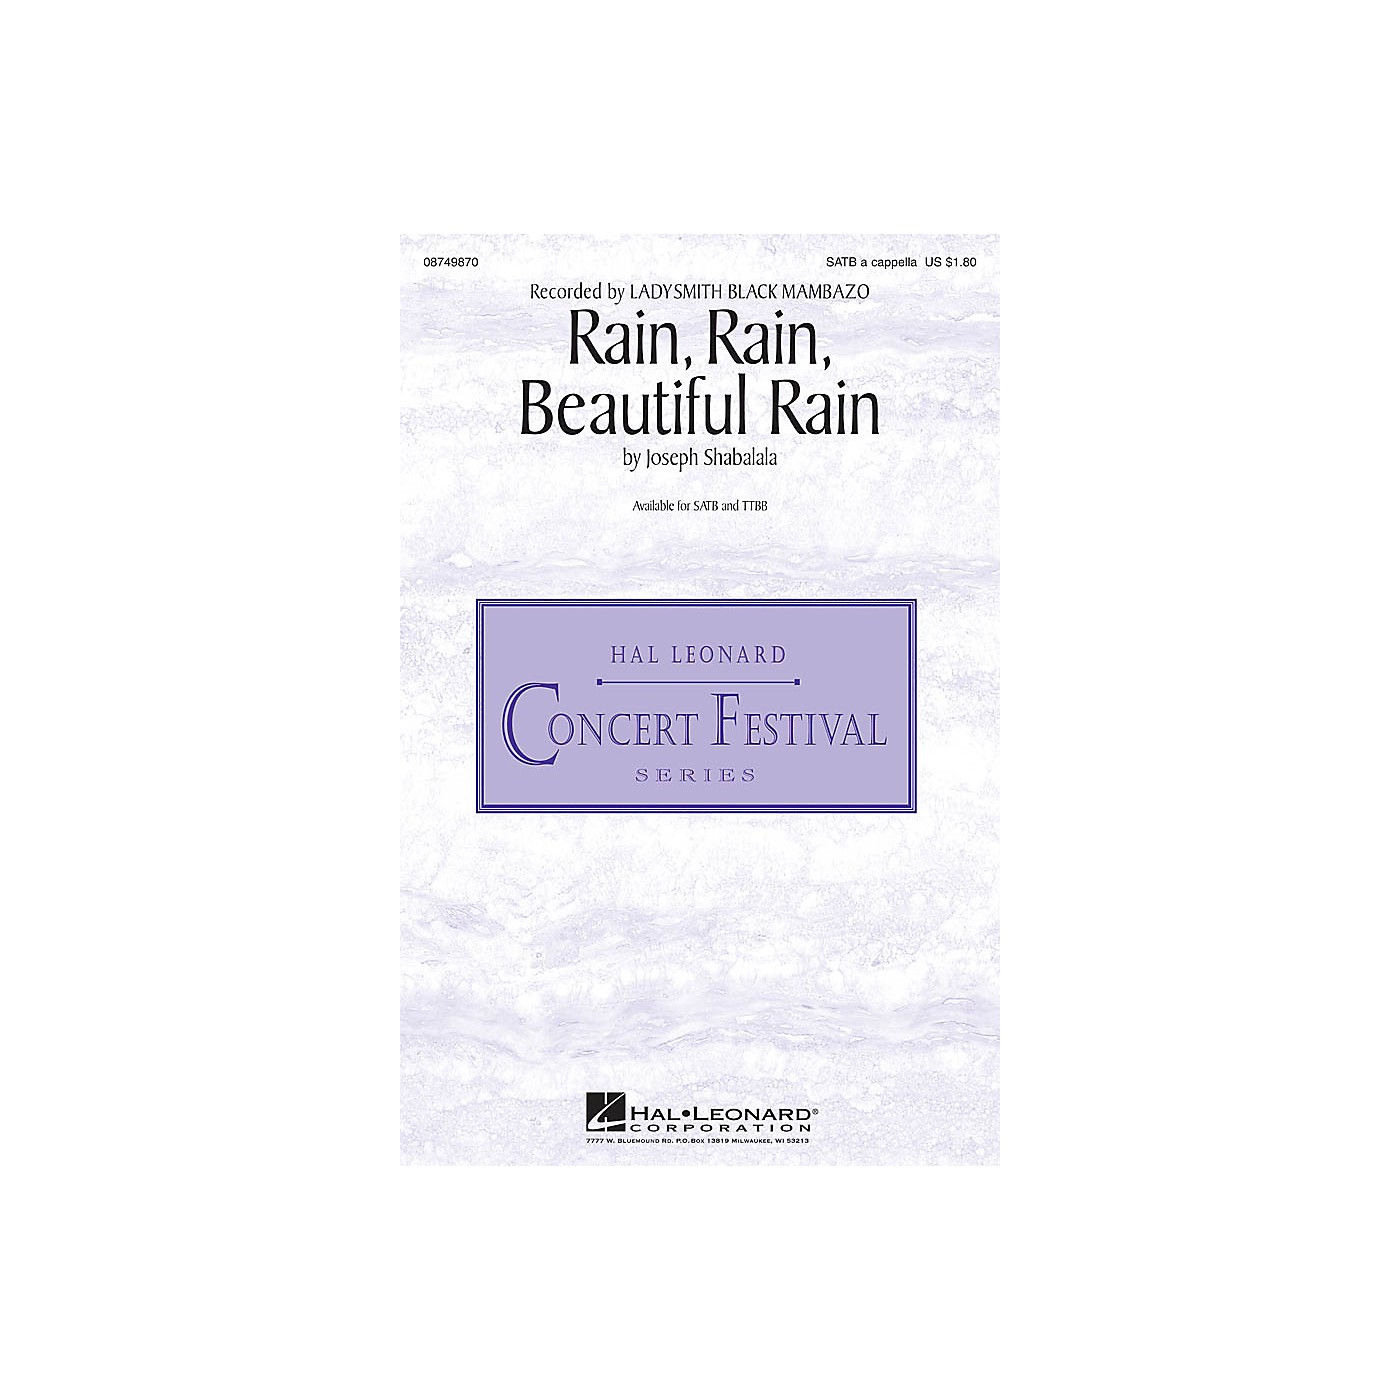 Hal Leonard Rain, Rain, Beautiful Rain SATB a cappella by Ladysmith Black Mambazo composed by Joseph Shabalala thumbnail